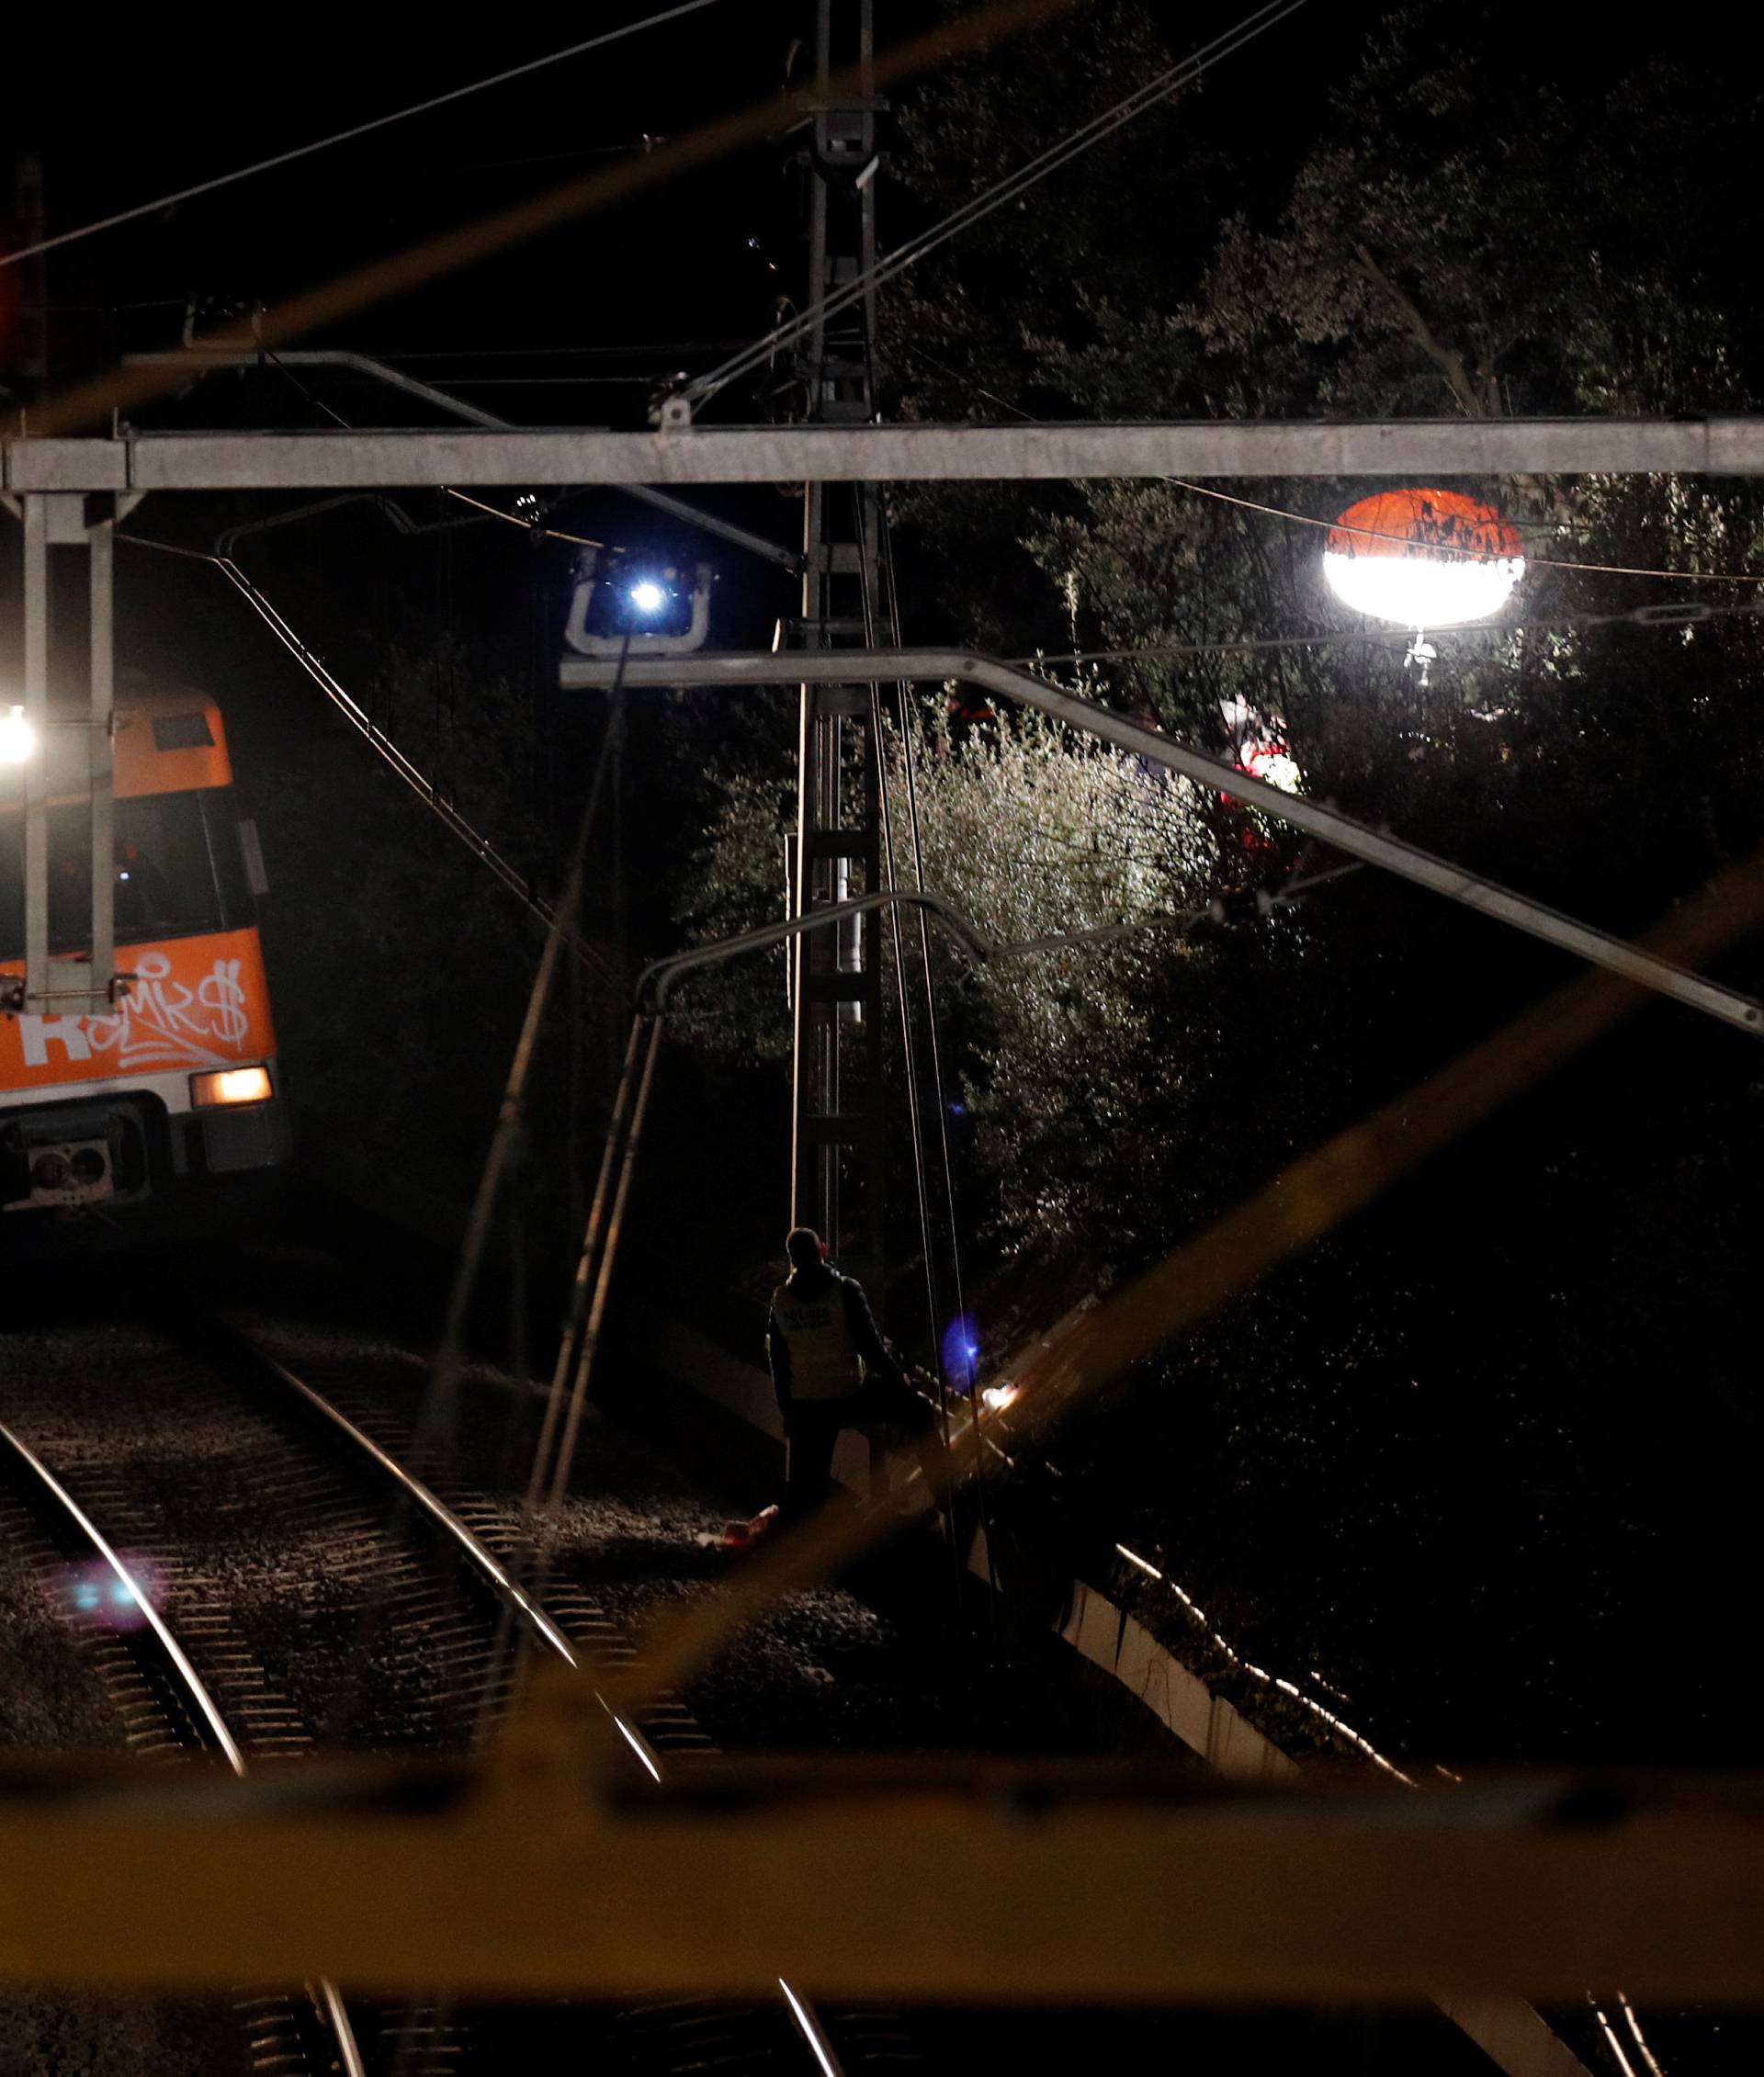 A train arrives to evacuate people after a train crash near Manresa